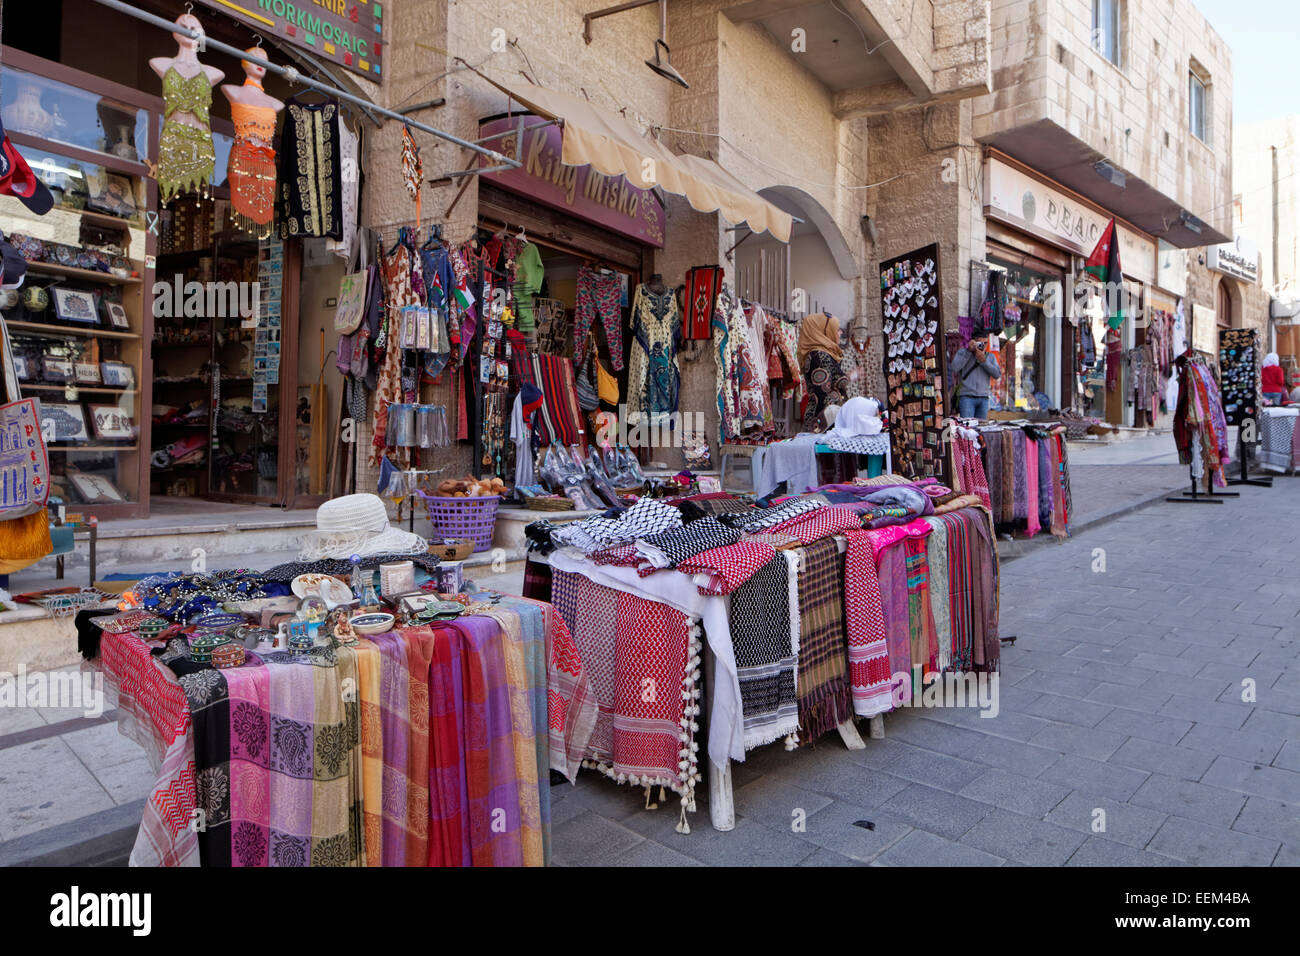 Tienda de souvenirs, Madaba, Jordania Foto de stock